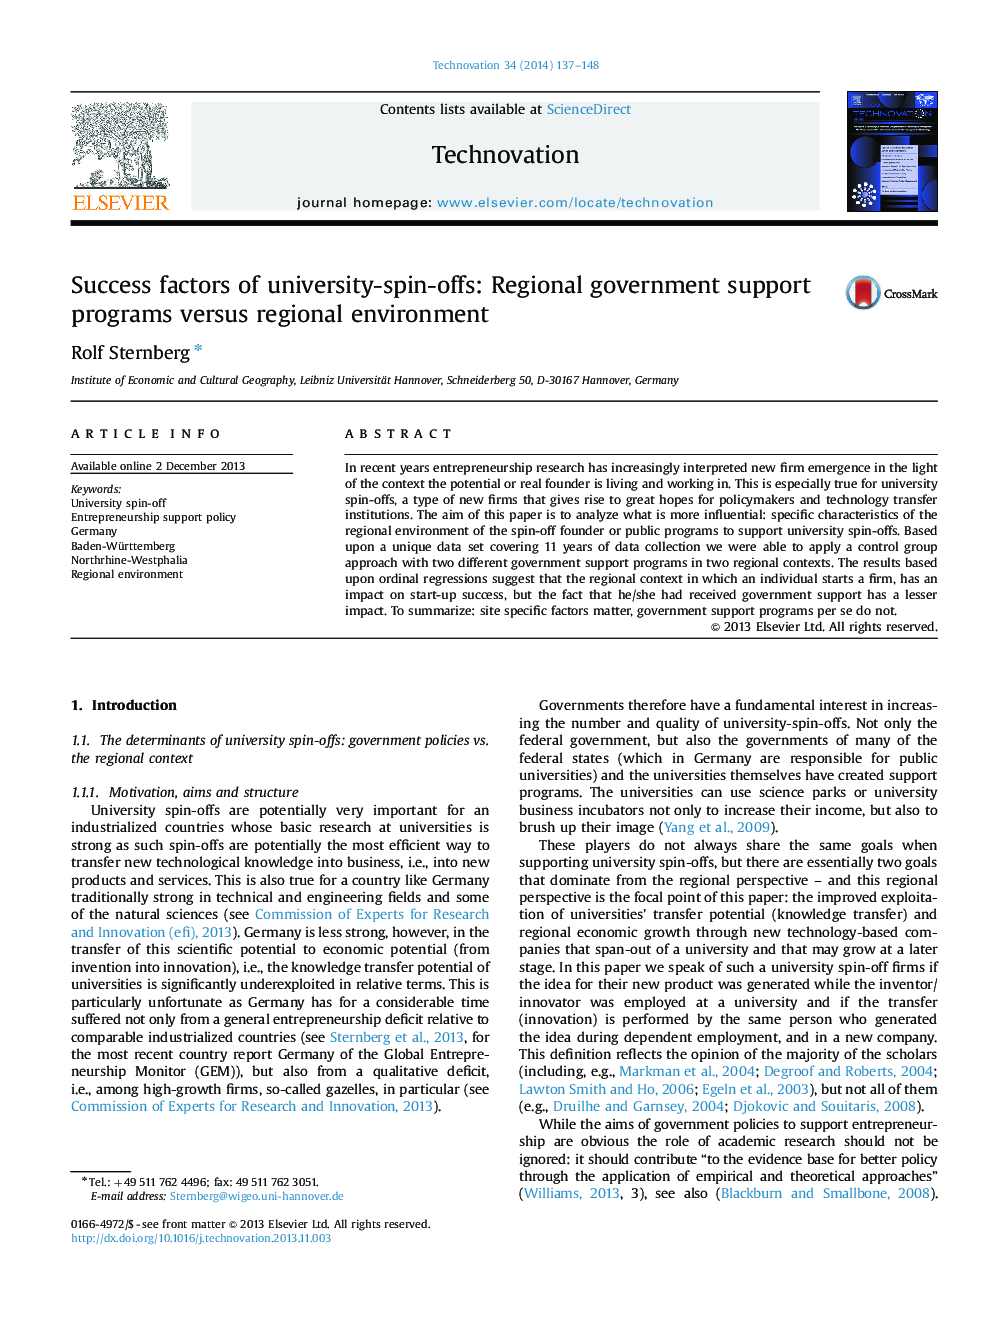 Success factors of university-spin-offs: Regional government support programs versus regional environment